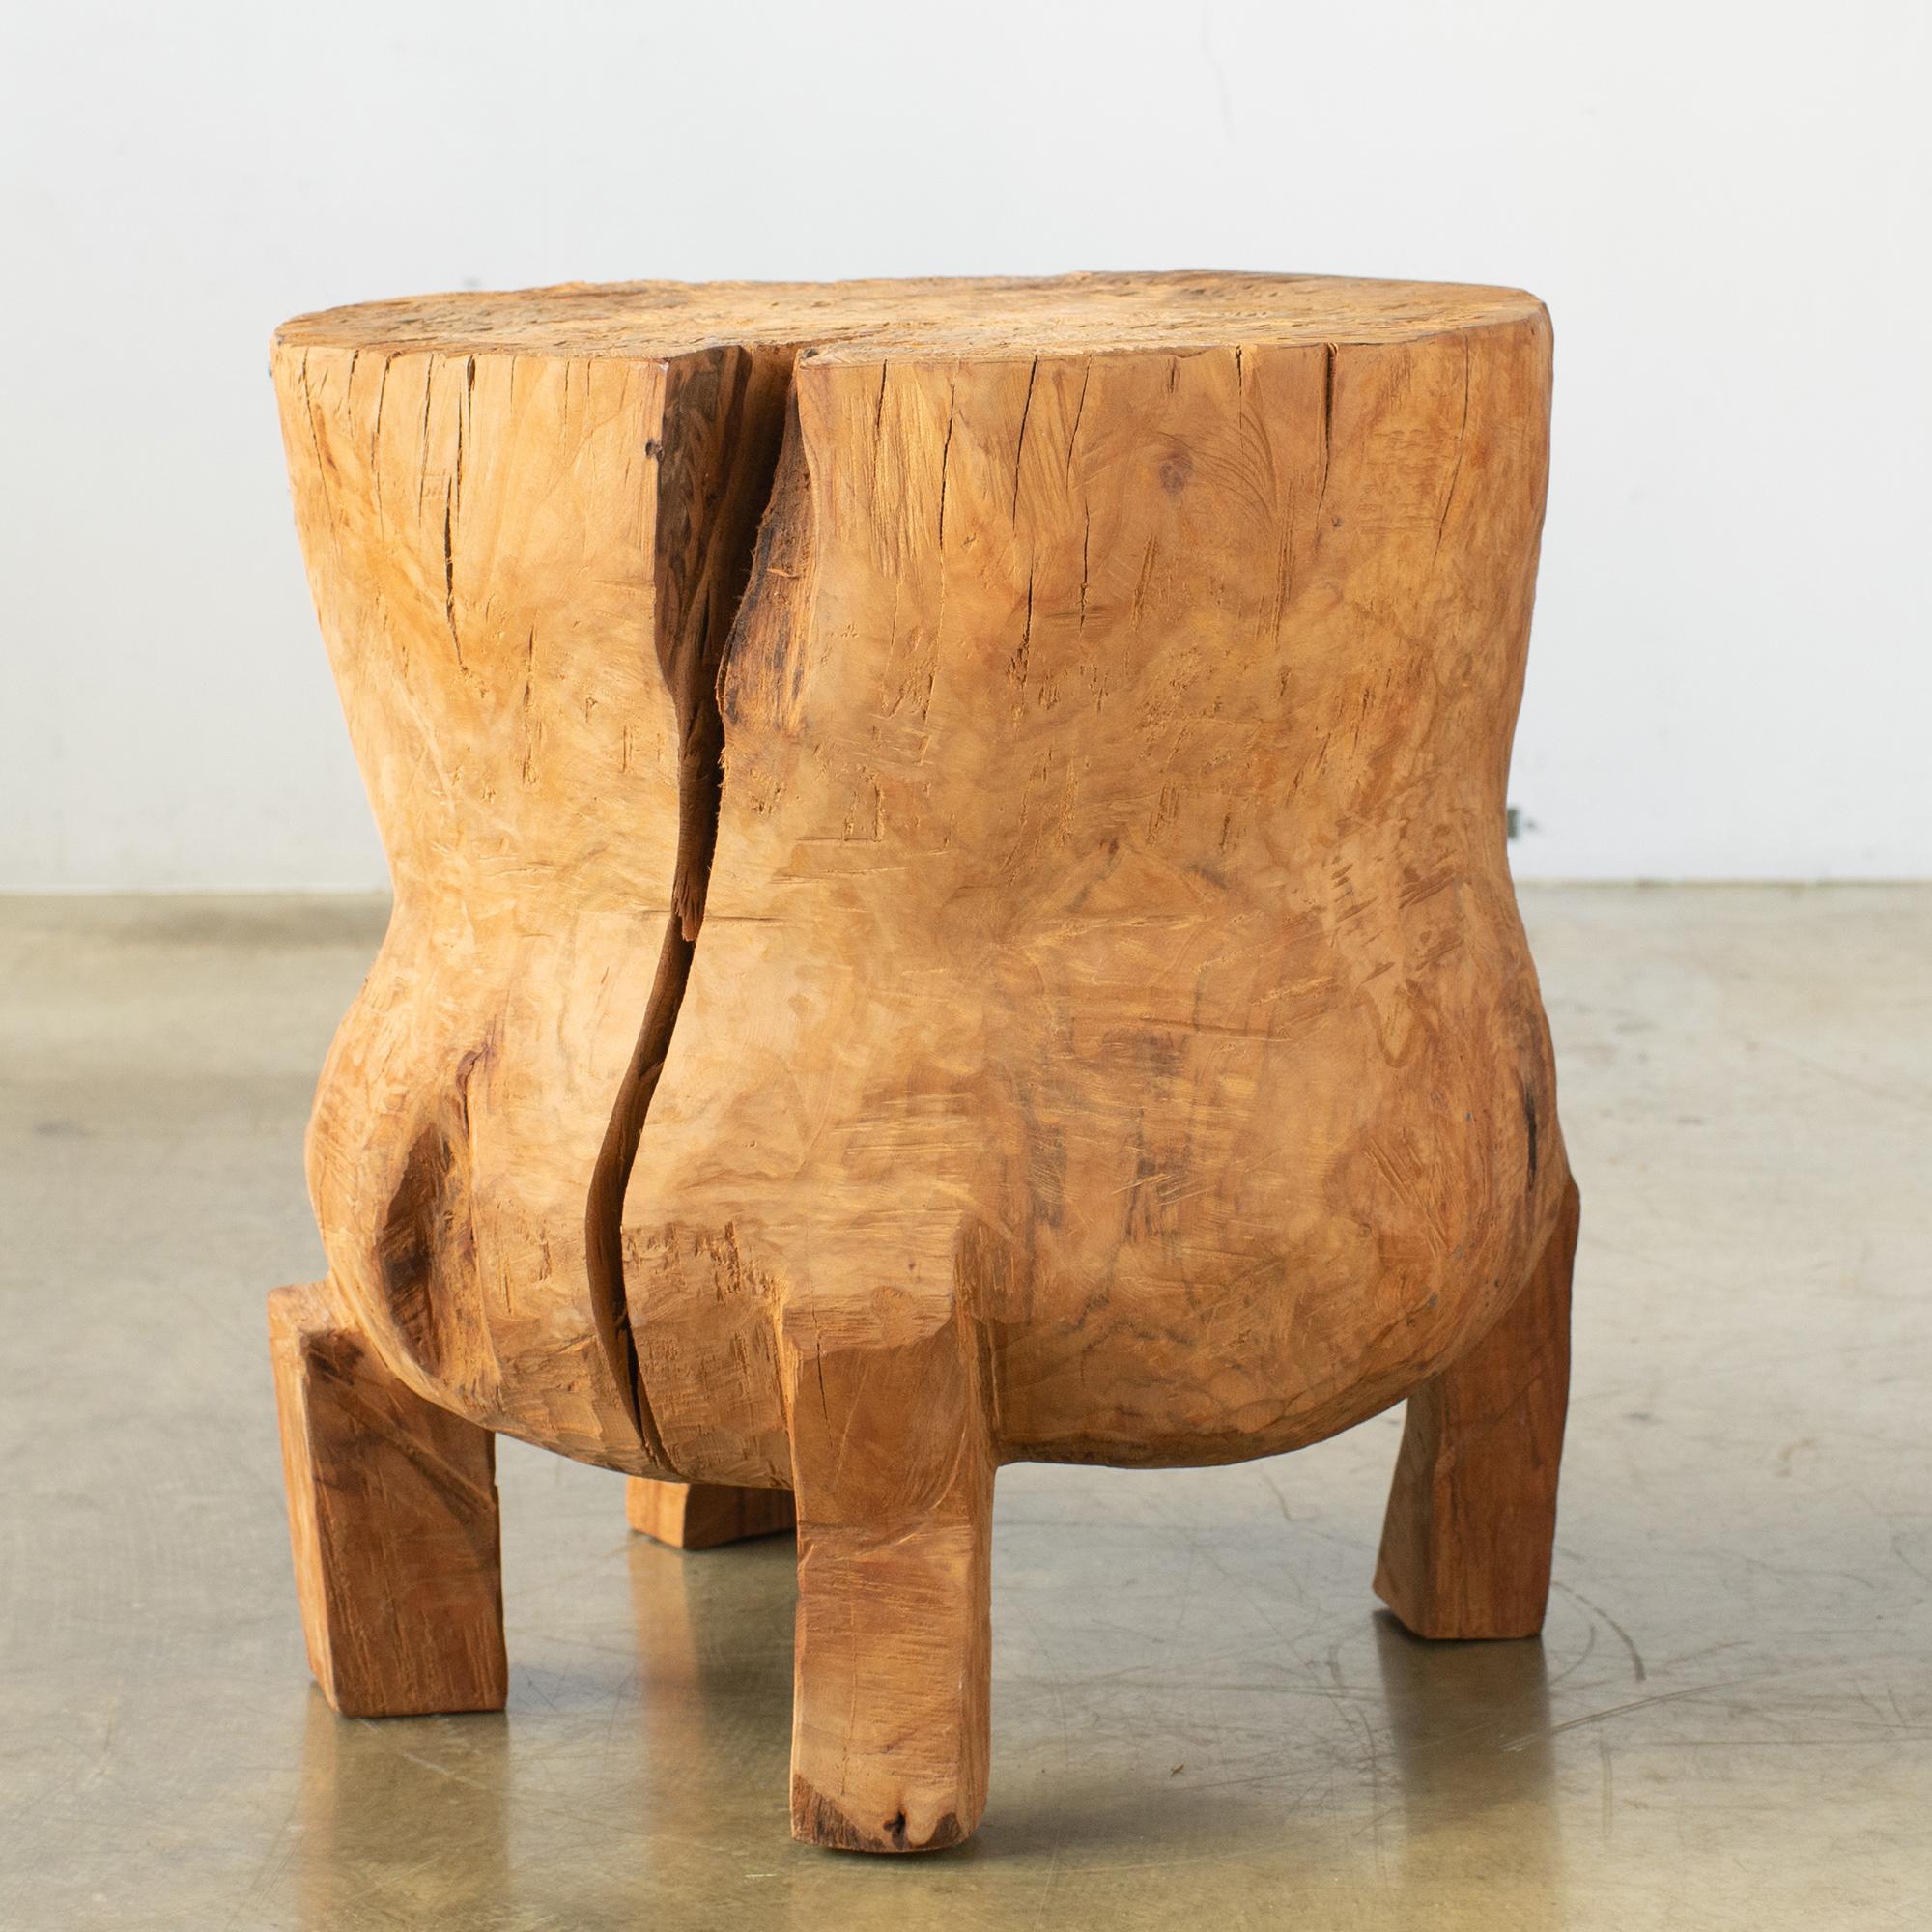 Japanese Hiroyuki Nishimura Sculptural Side Table Stool 23 